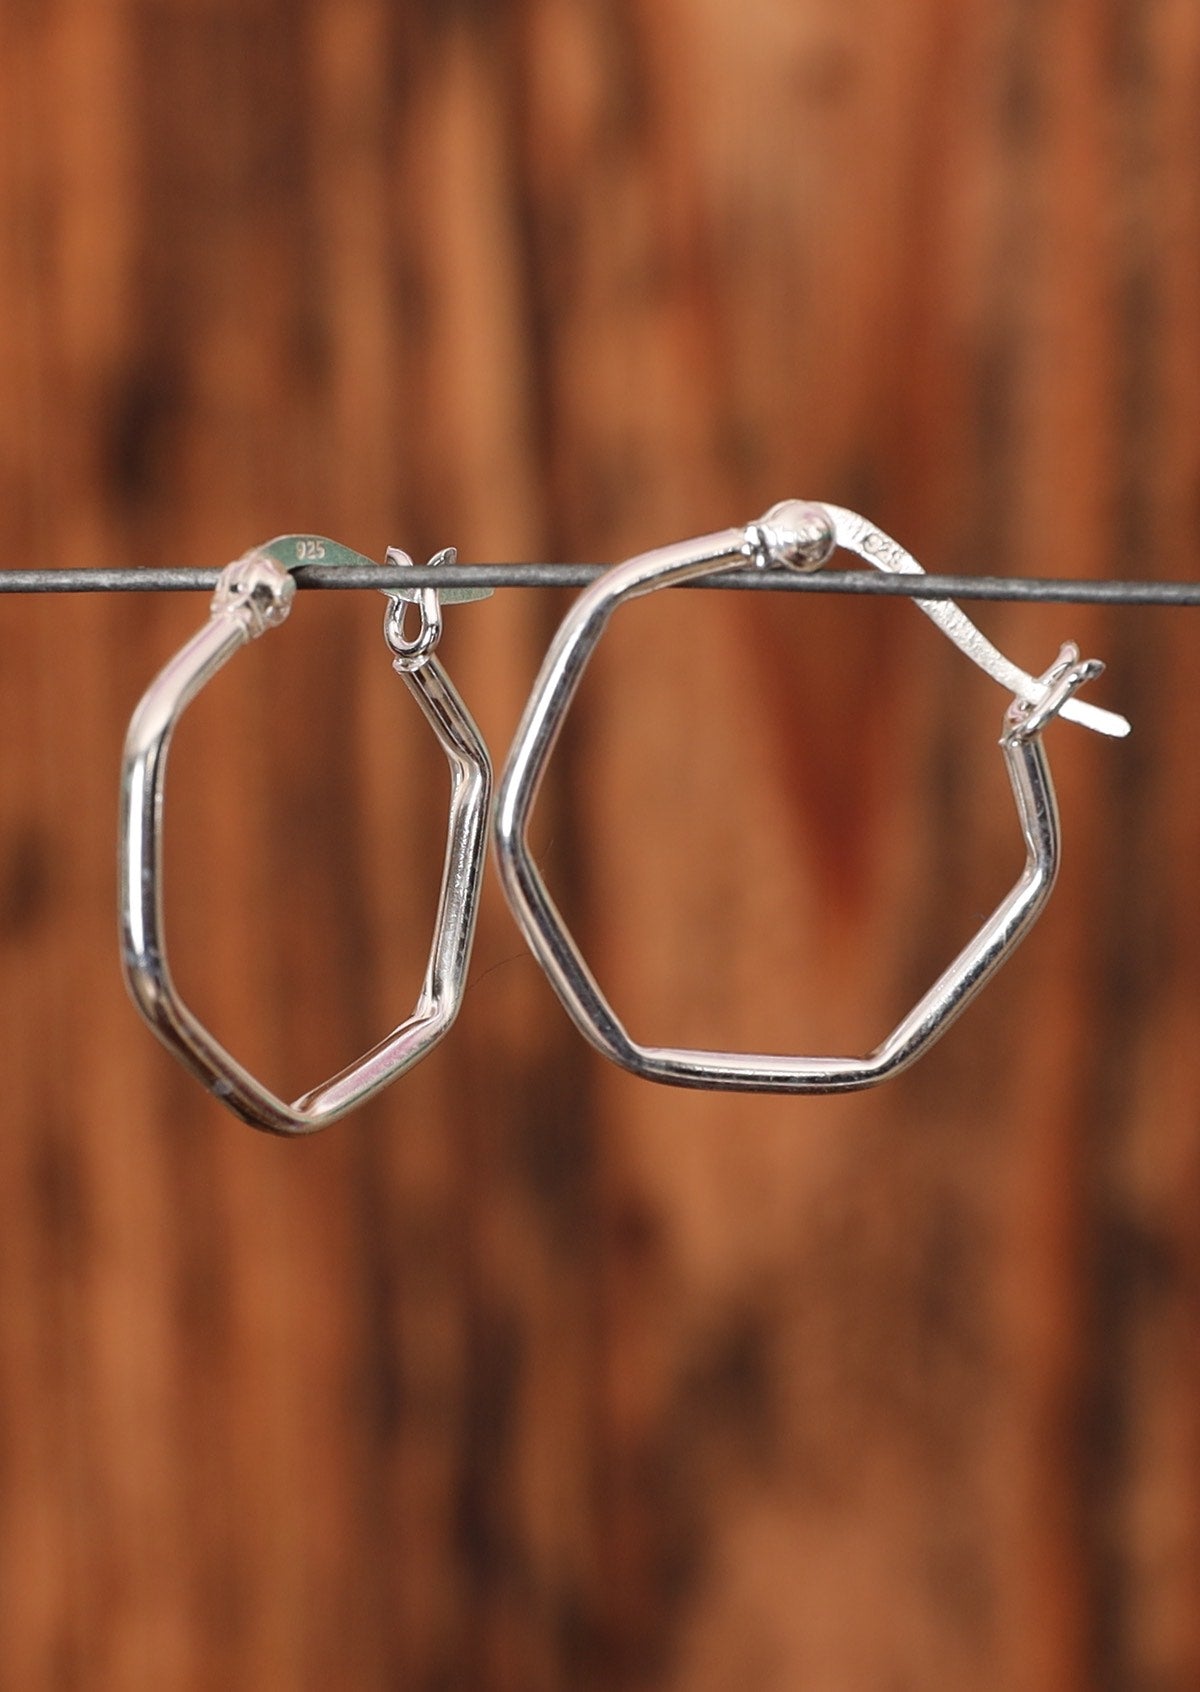 92.5% silver hoop earrings in a hexagonal shape sitting on wire for display.